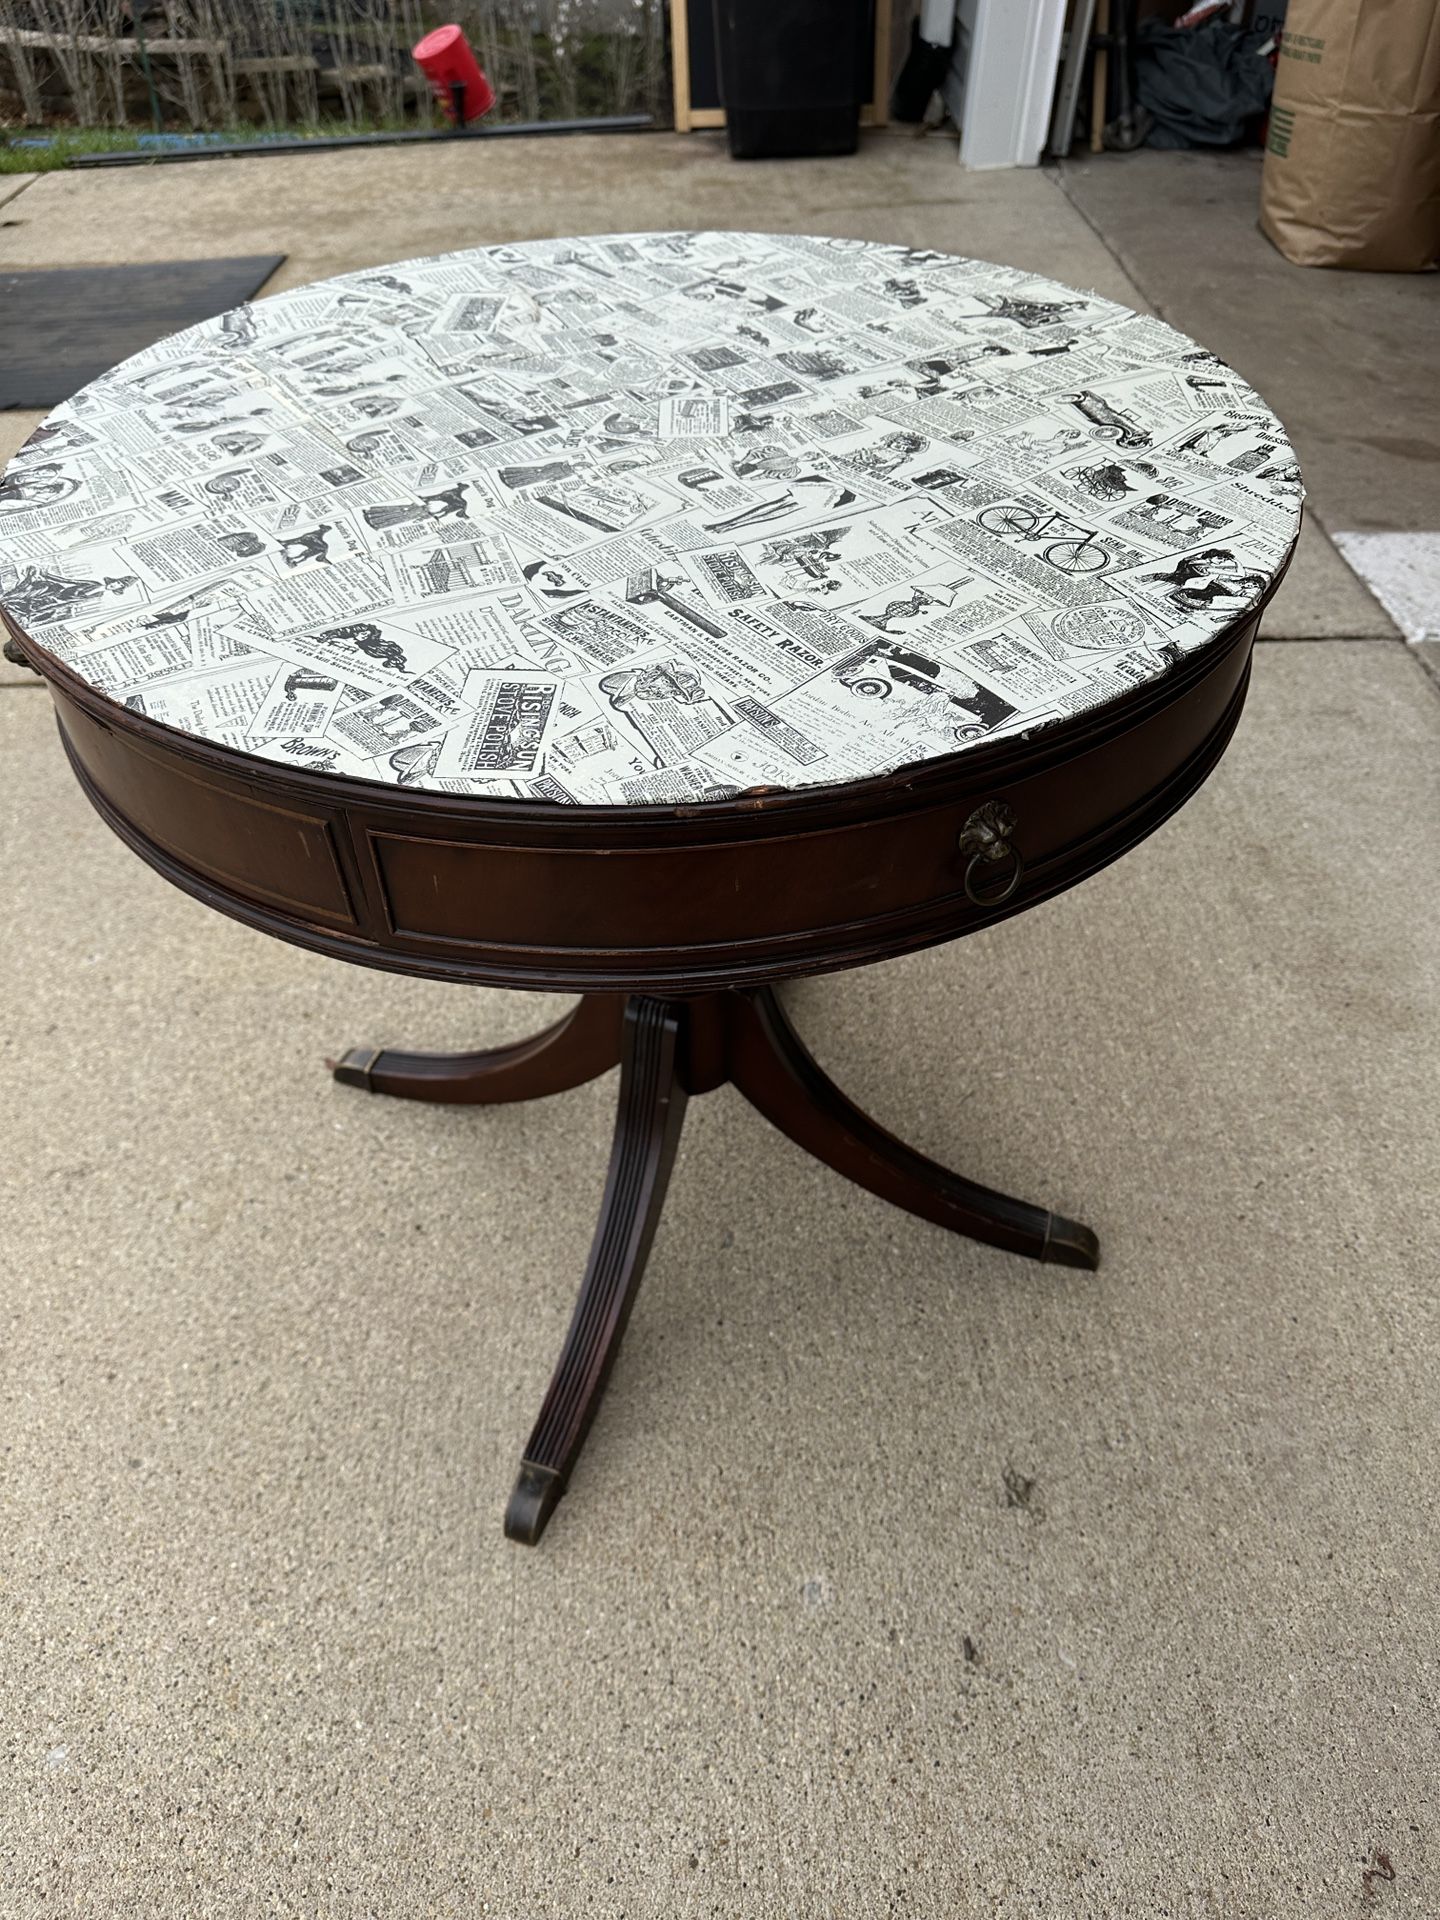 Round antique table